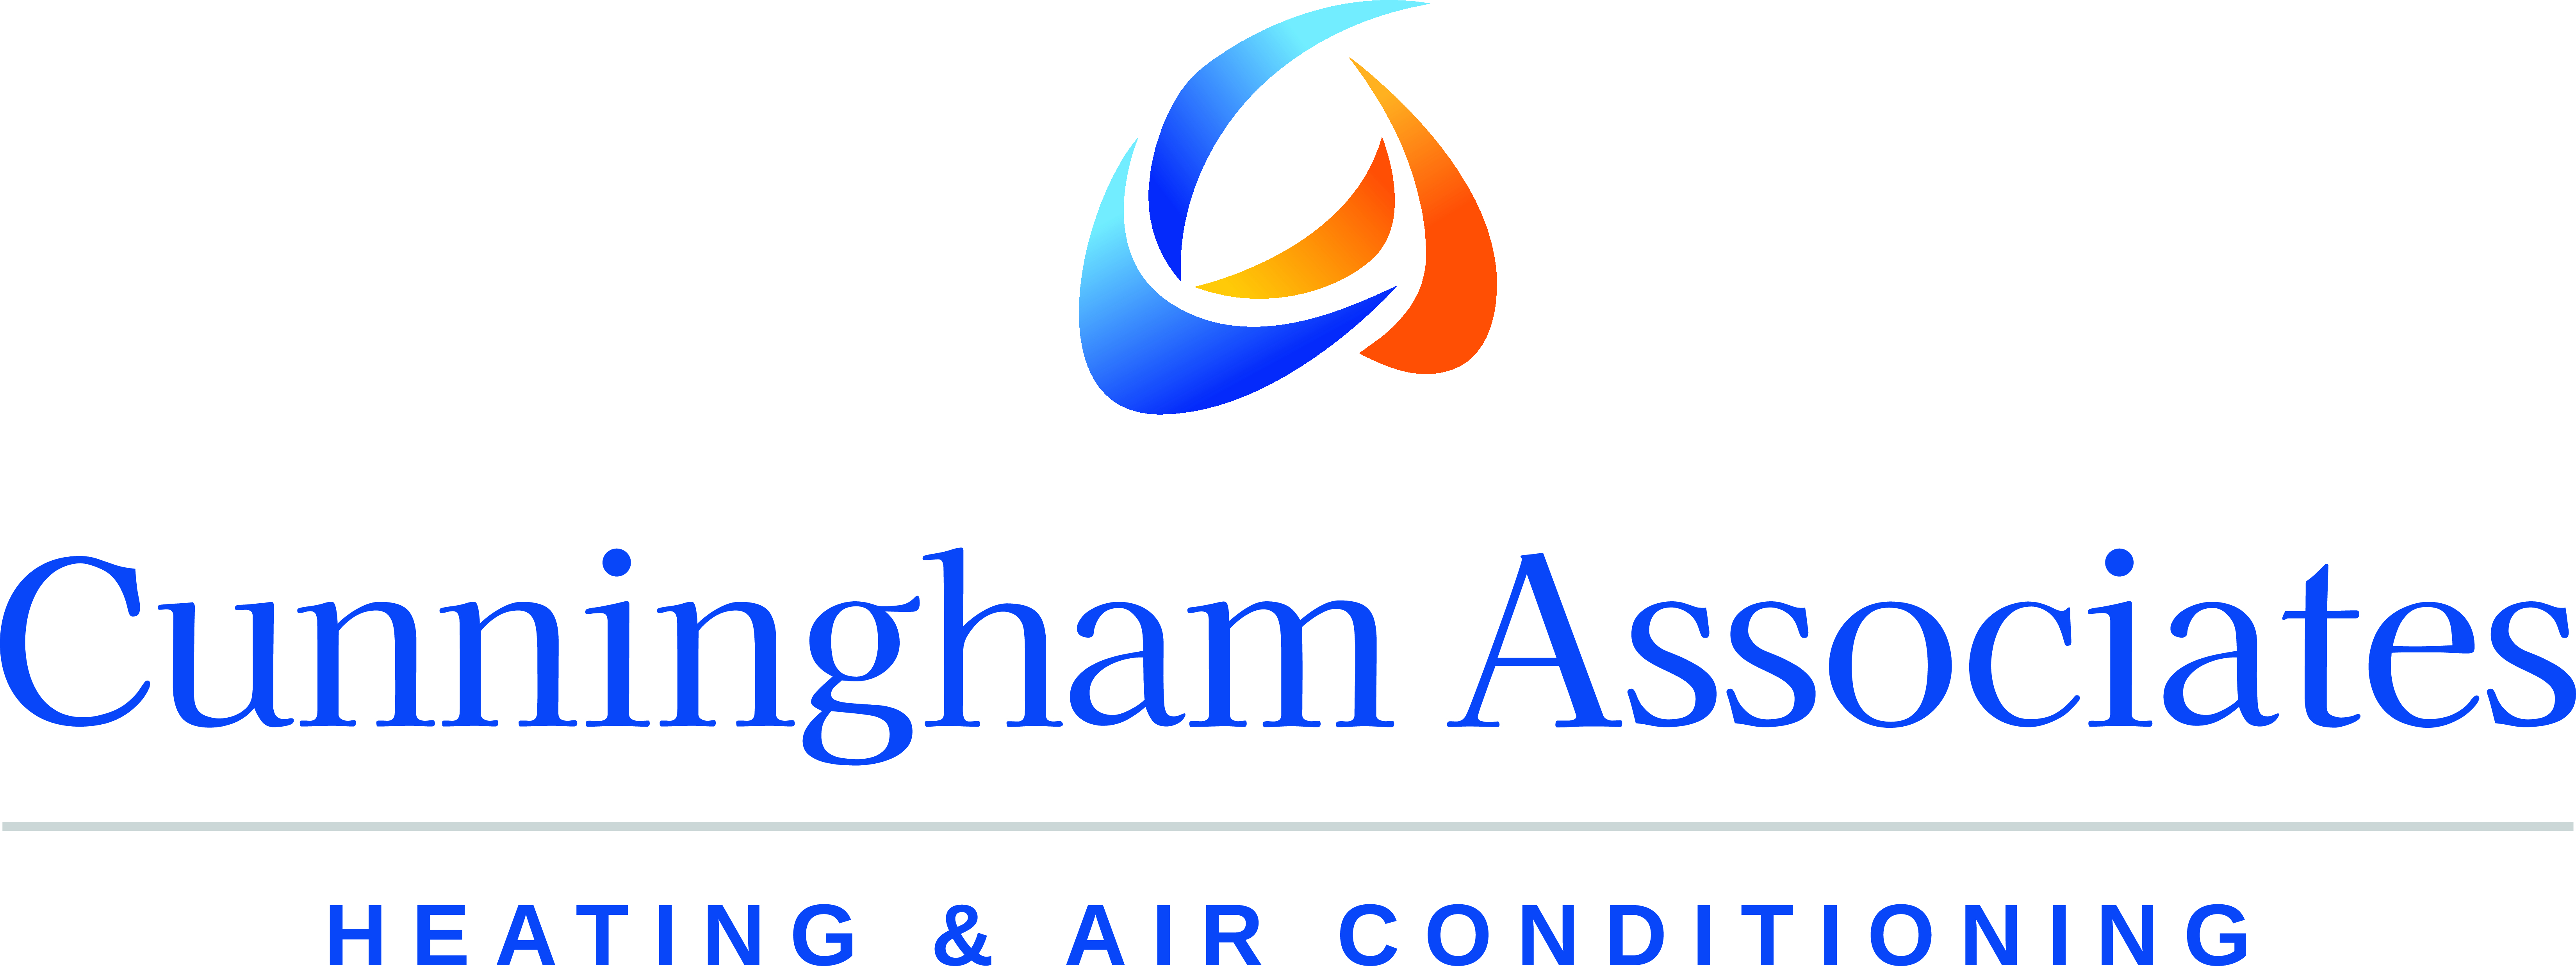 Cunningham Associates Heating & Air Conditioning Logo